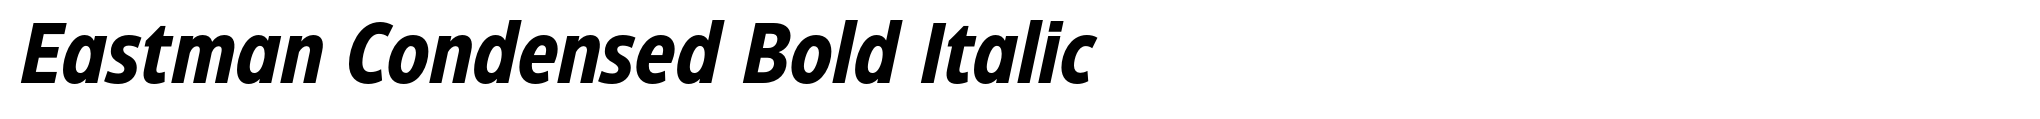 Eastman Condensed Bold Italic image